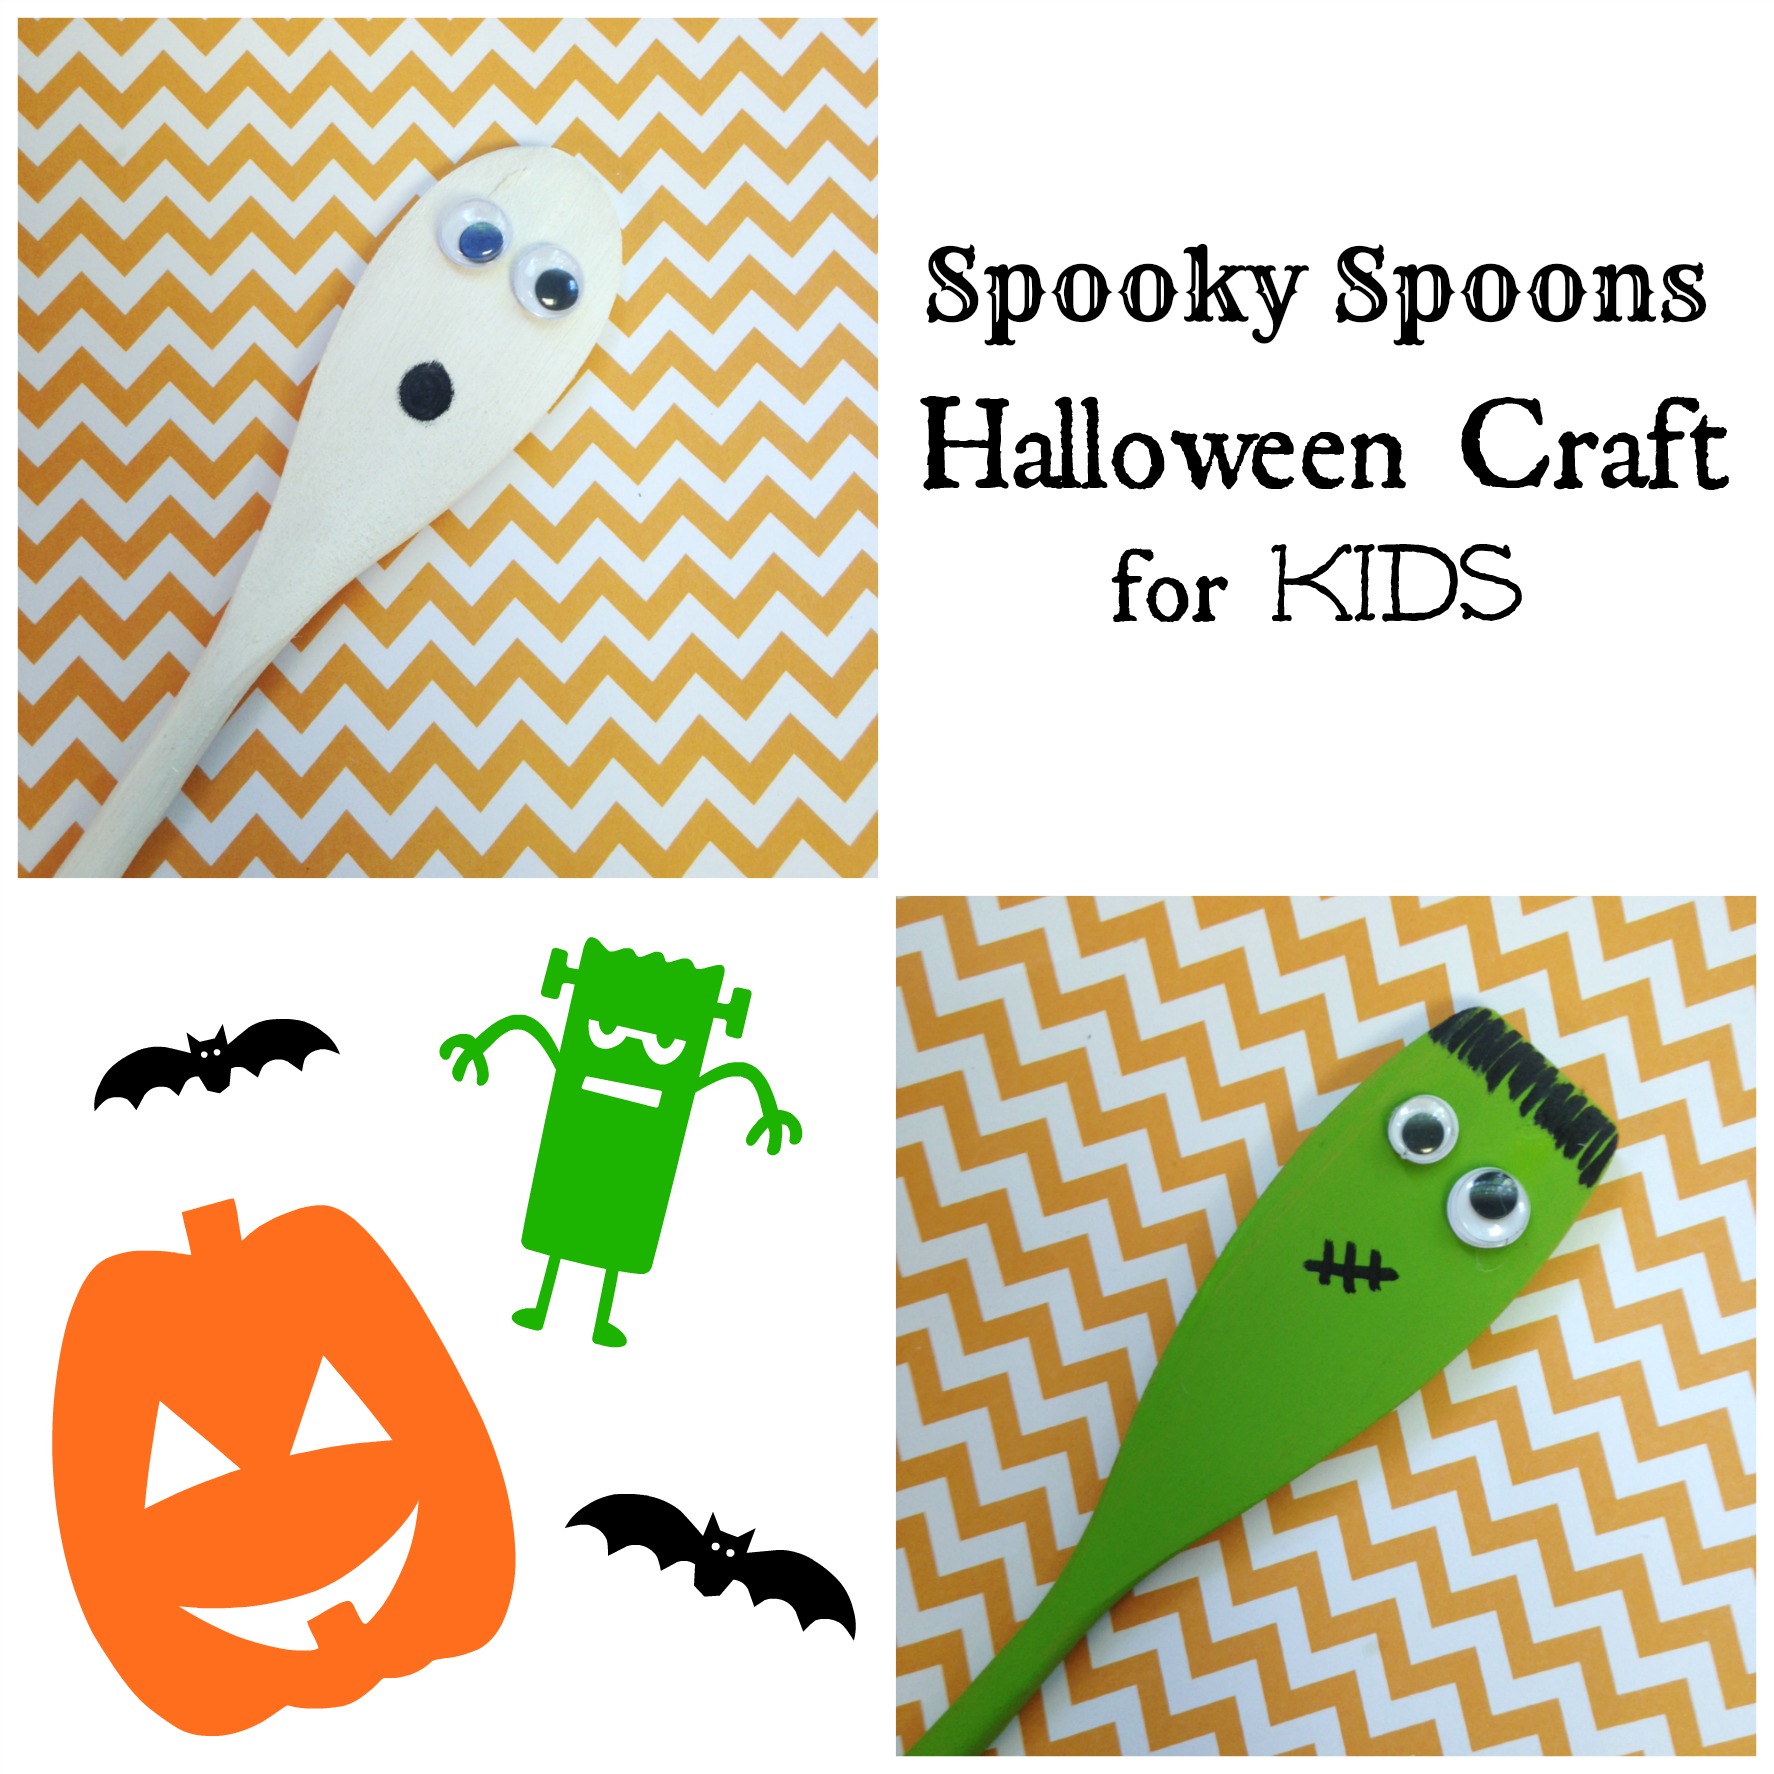 DIY Spooky Spoons